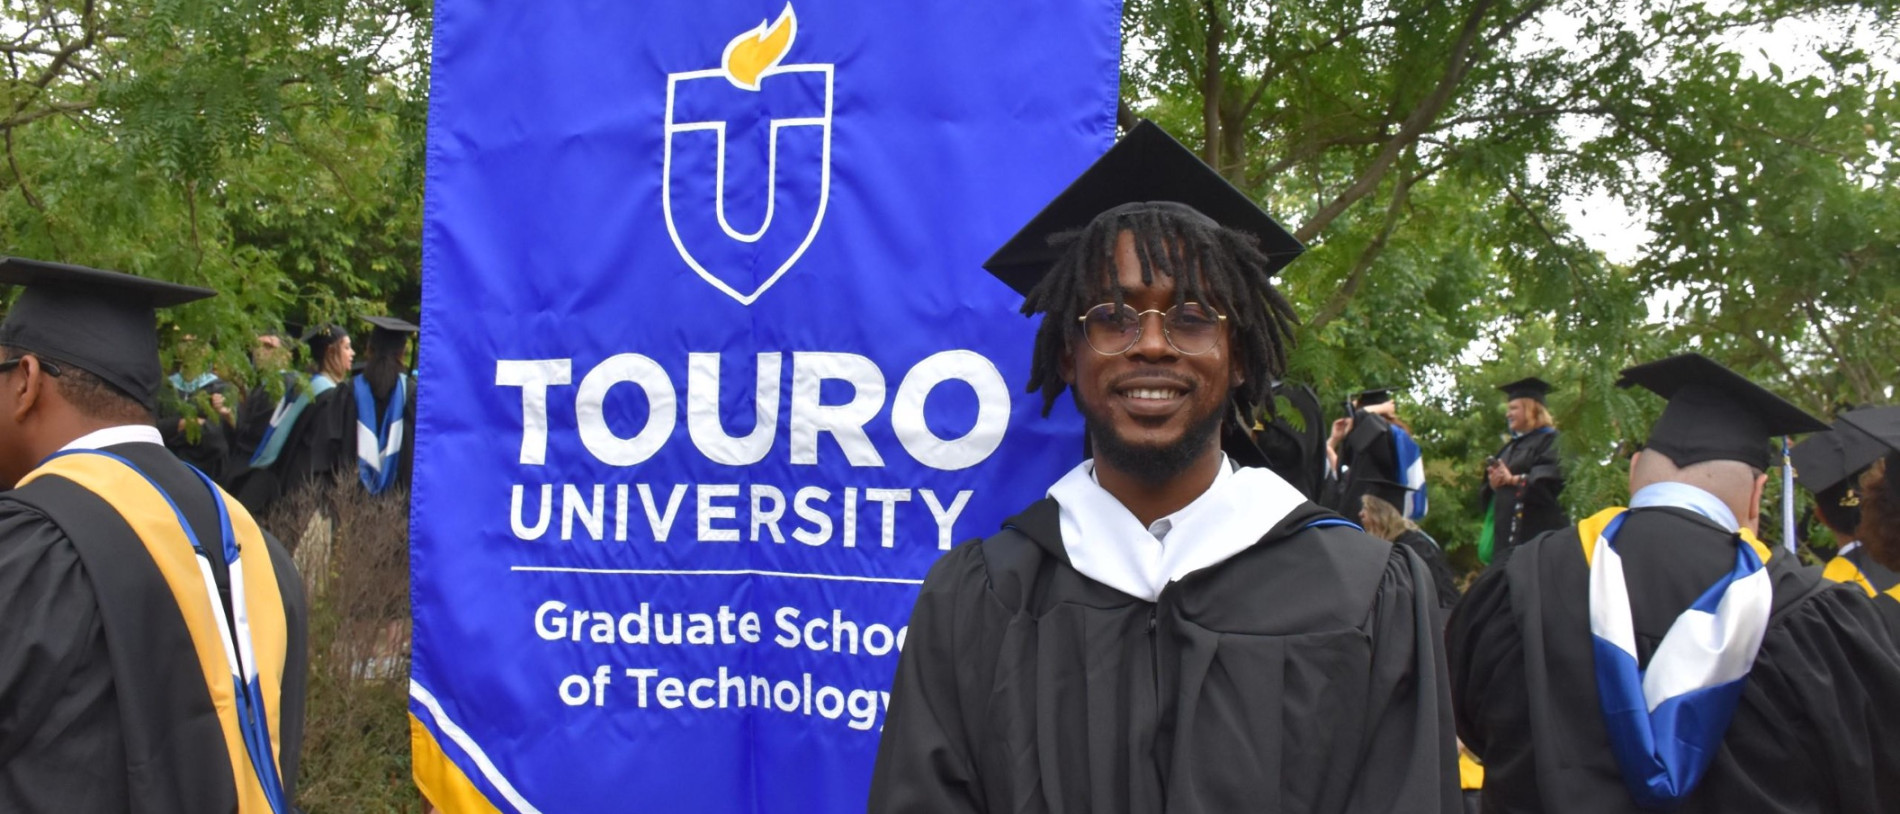 Touro University Graduate school of Technology